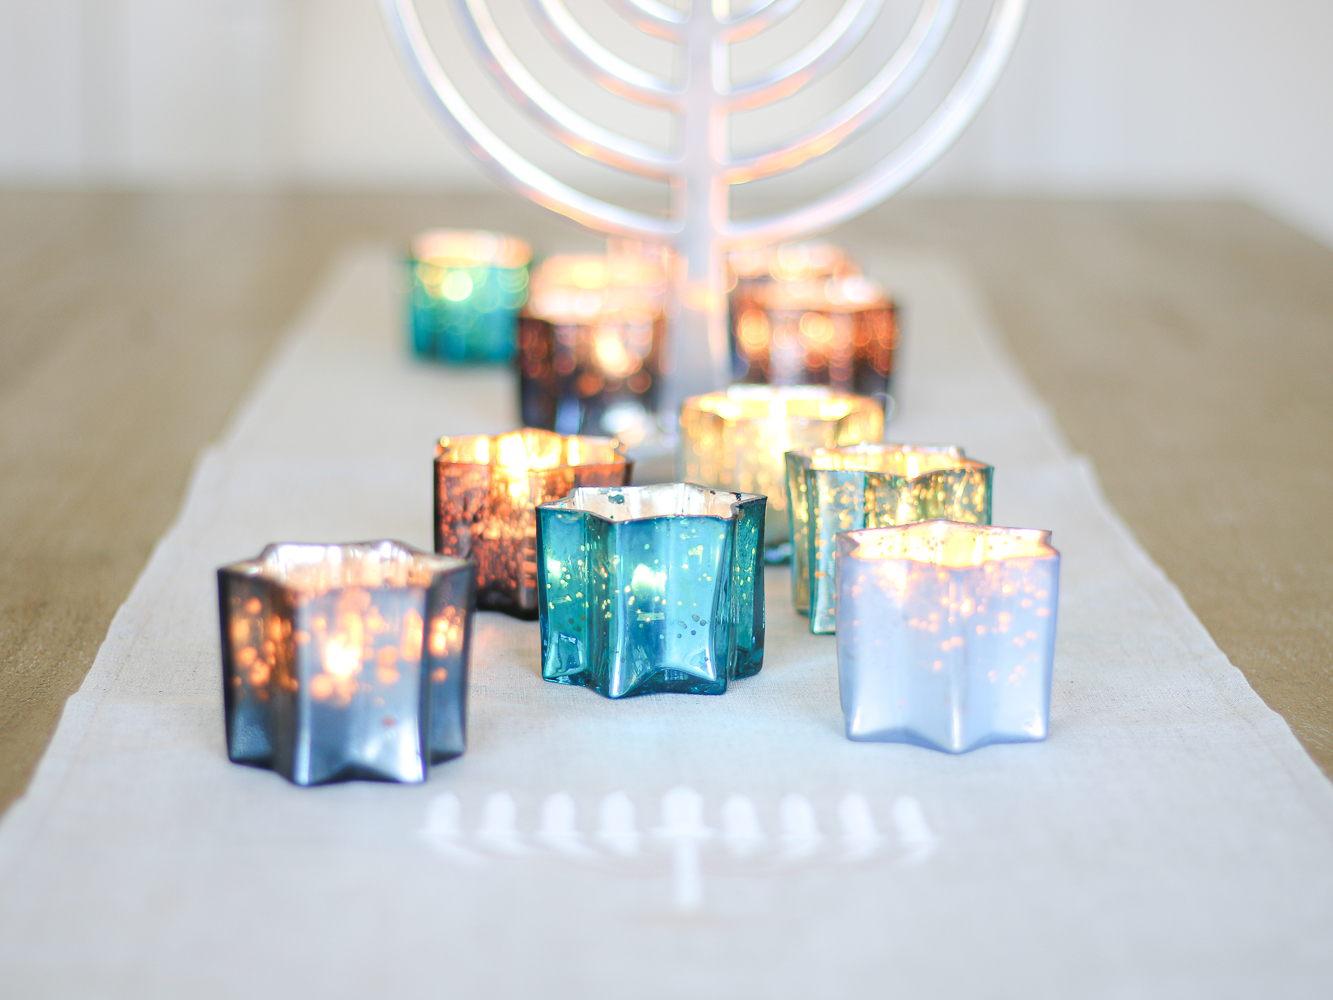 Stylish Hanukkah Decor For The Contemporary Home